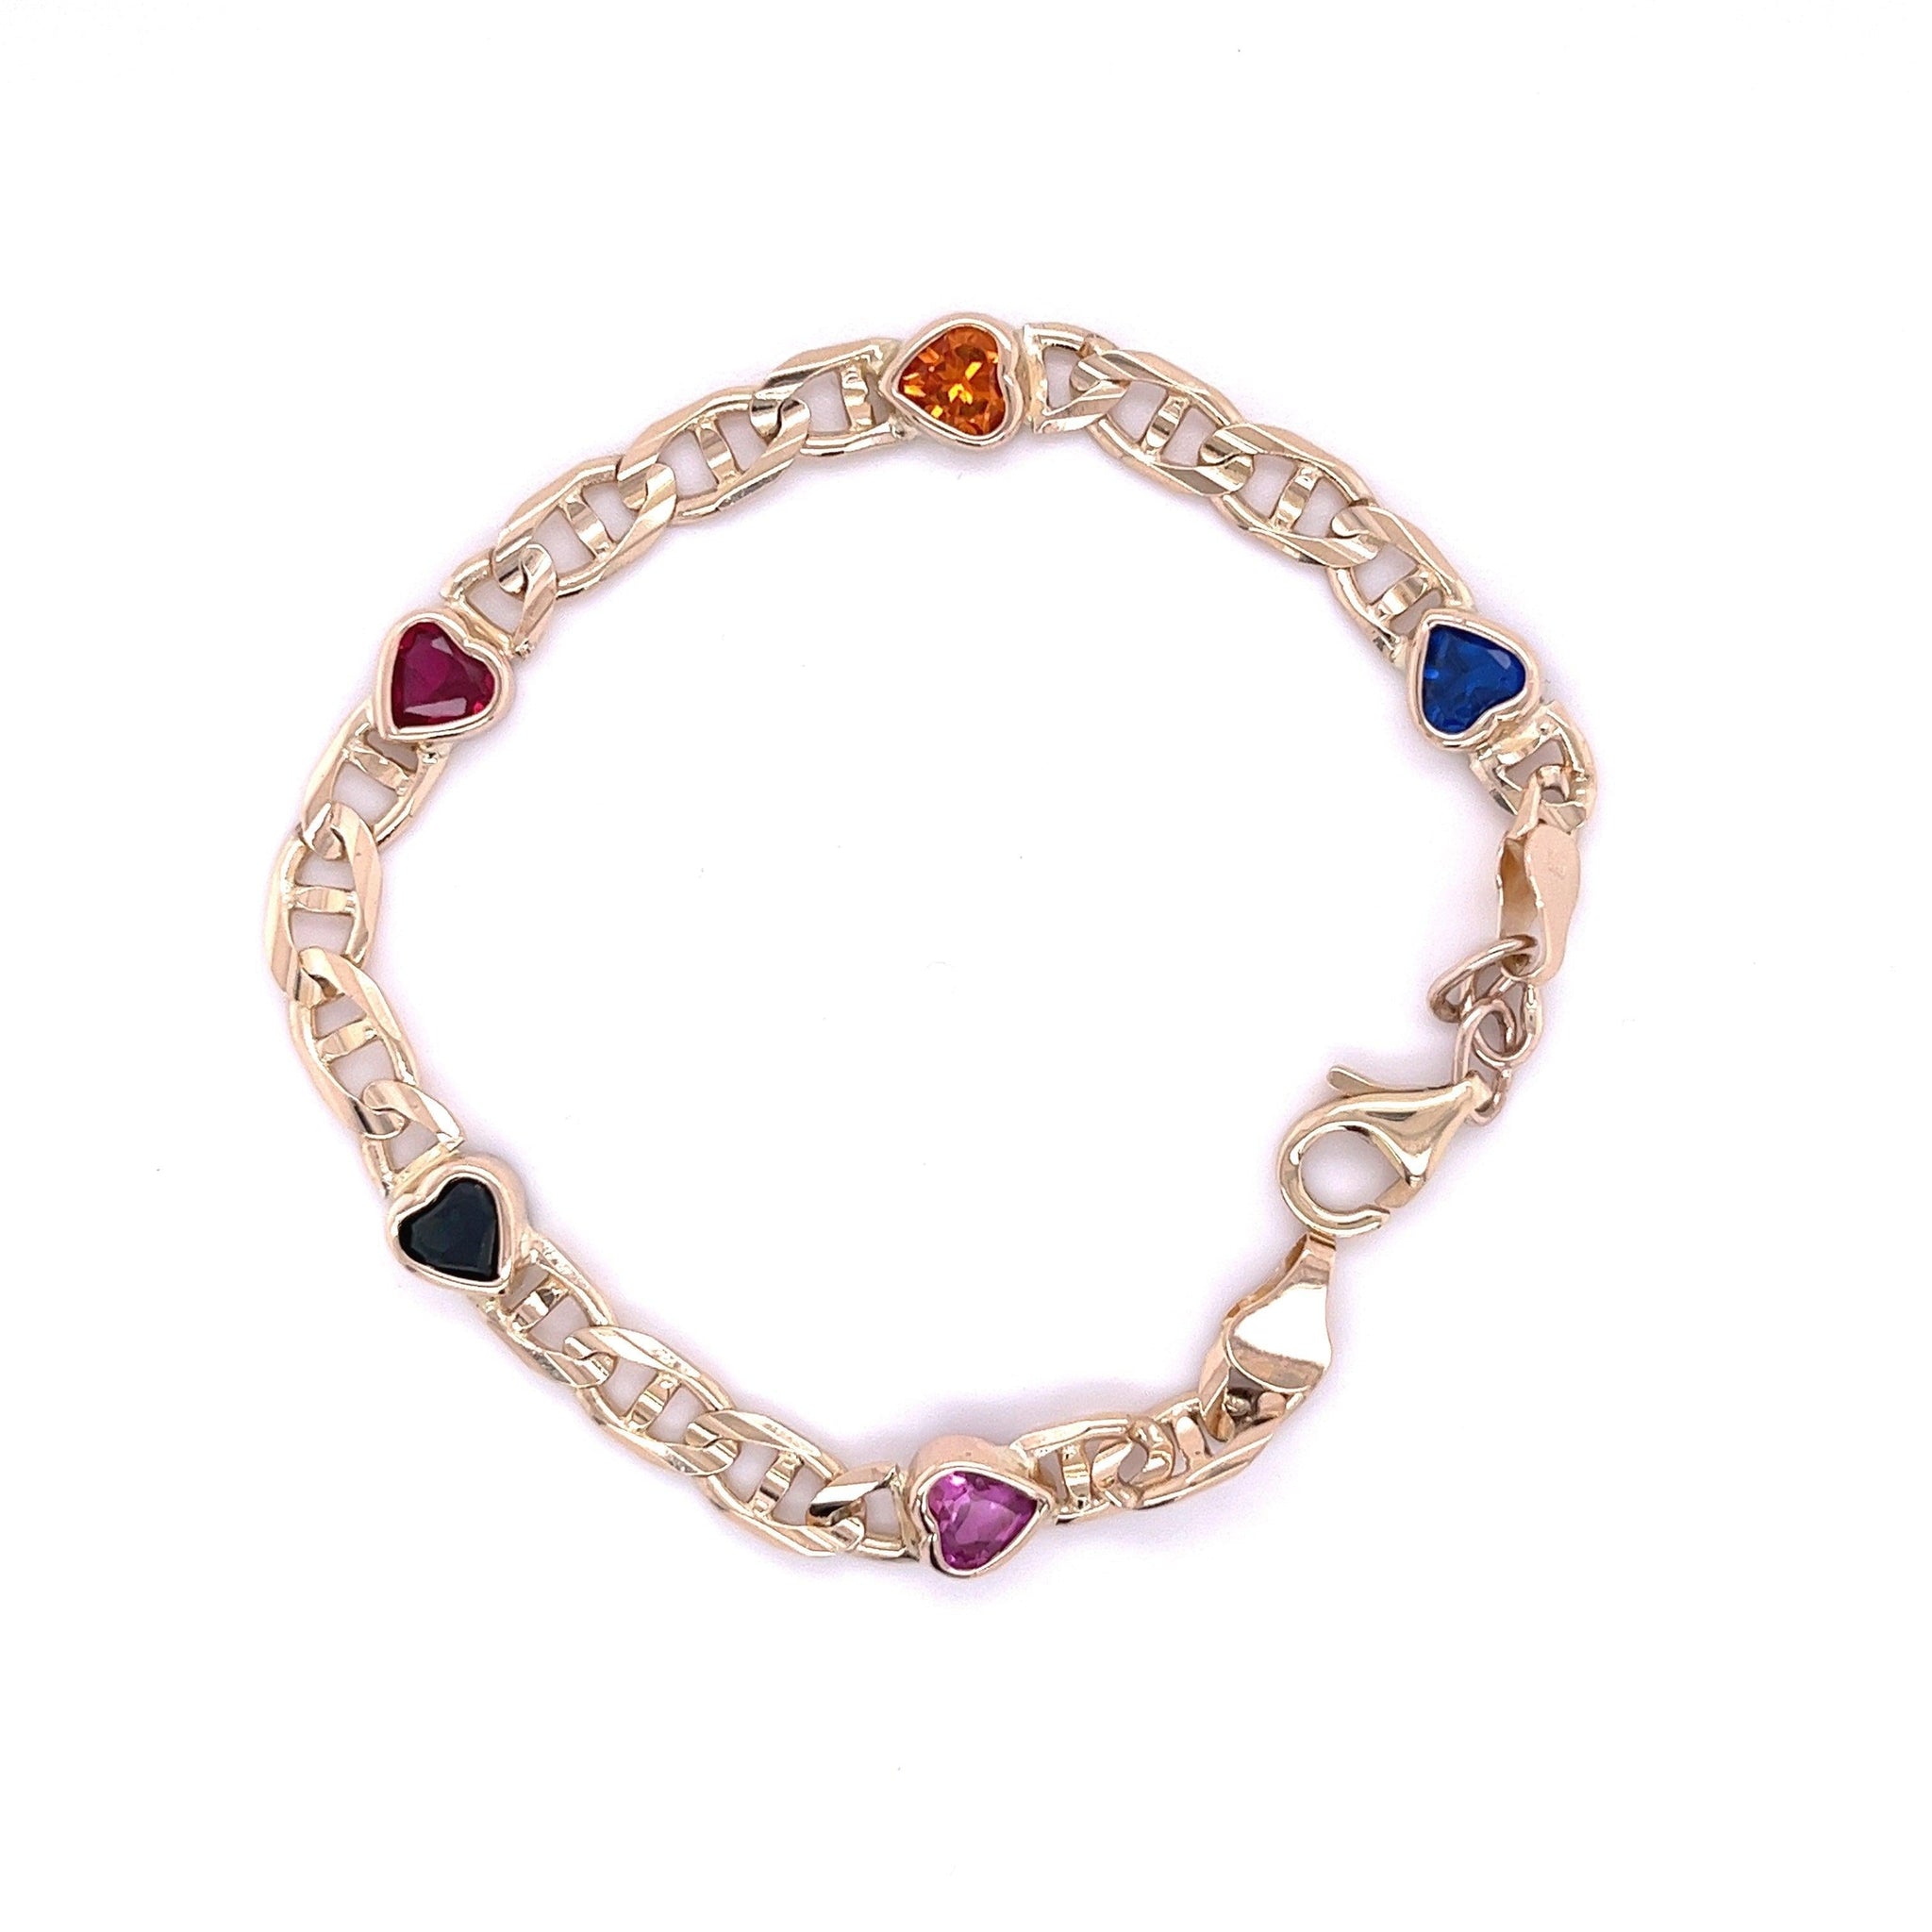 Buy Peridot Amethyst Garnet Crinite Natural Gemstones bracelets 925  Sterling Silver handmade Jewellery at Amazon.in